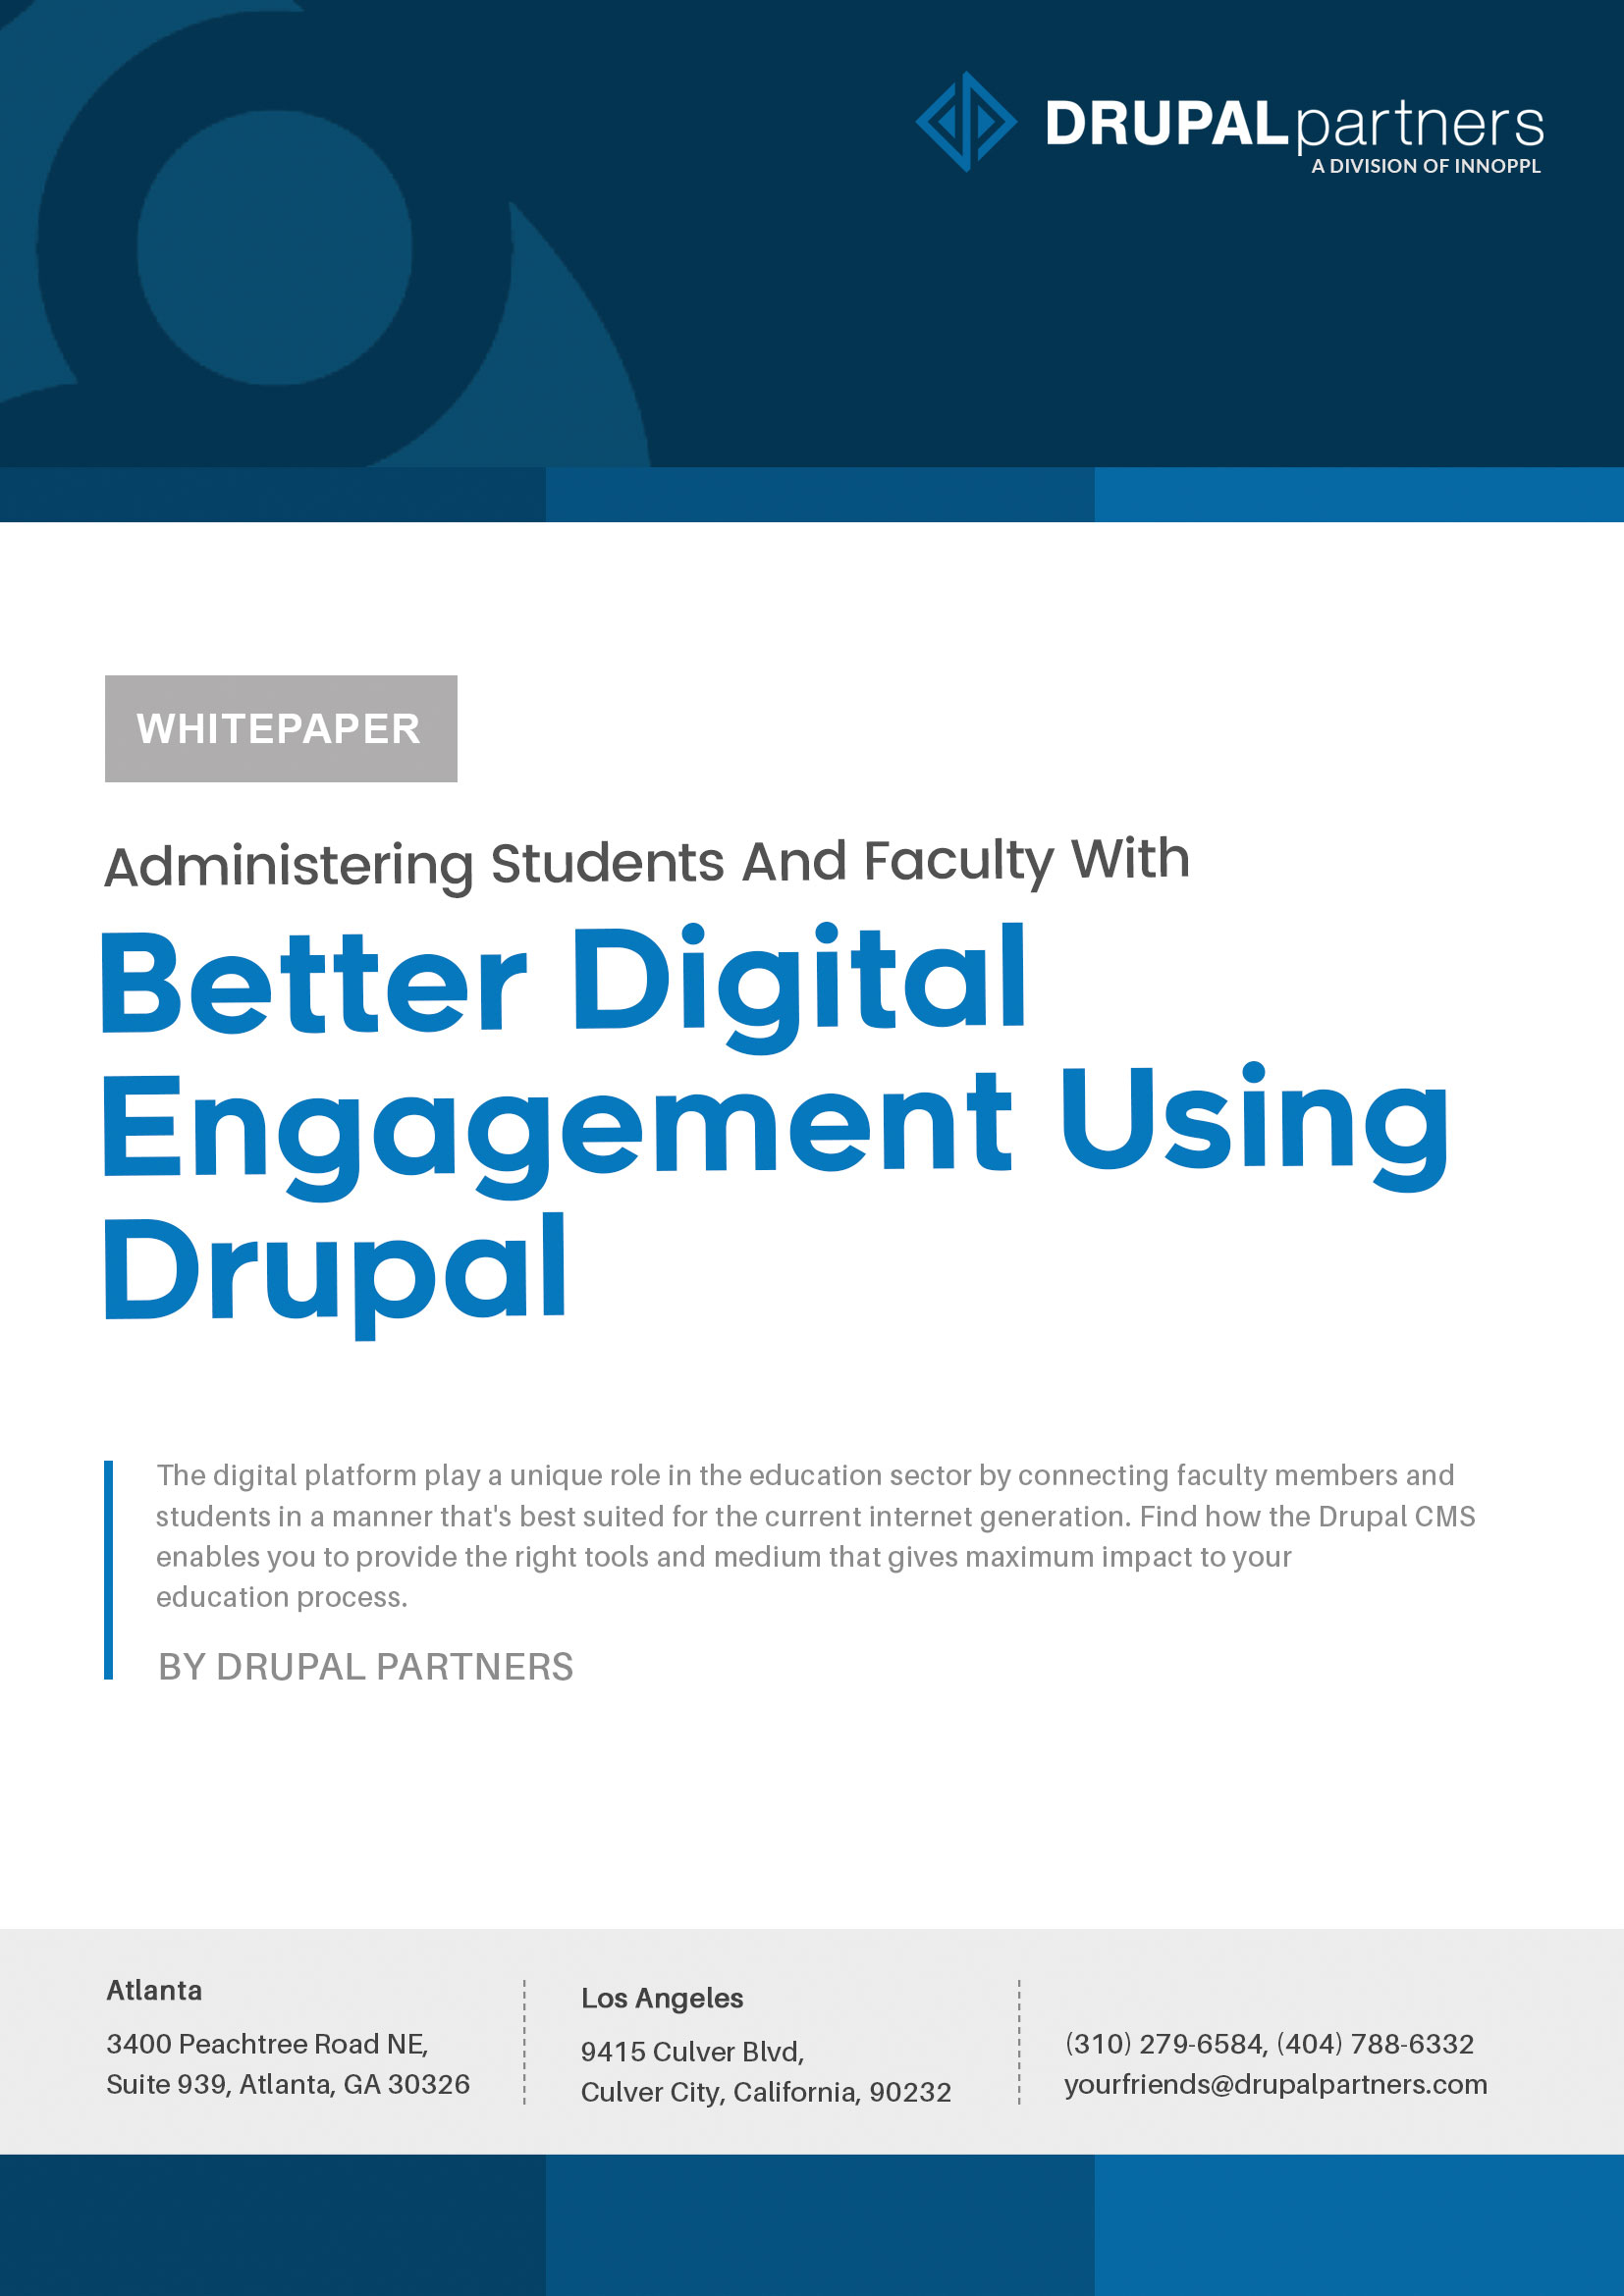 Better Digital Engagement